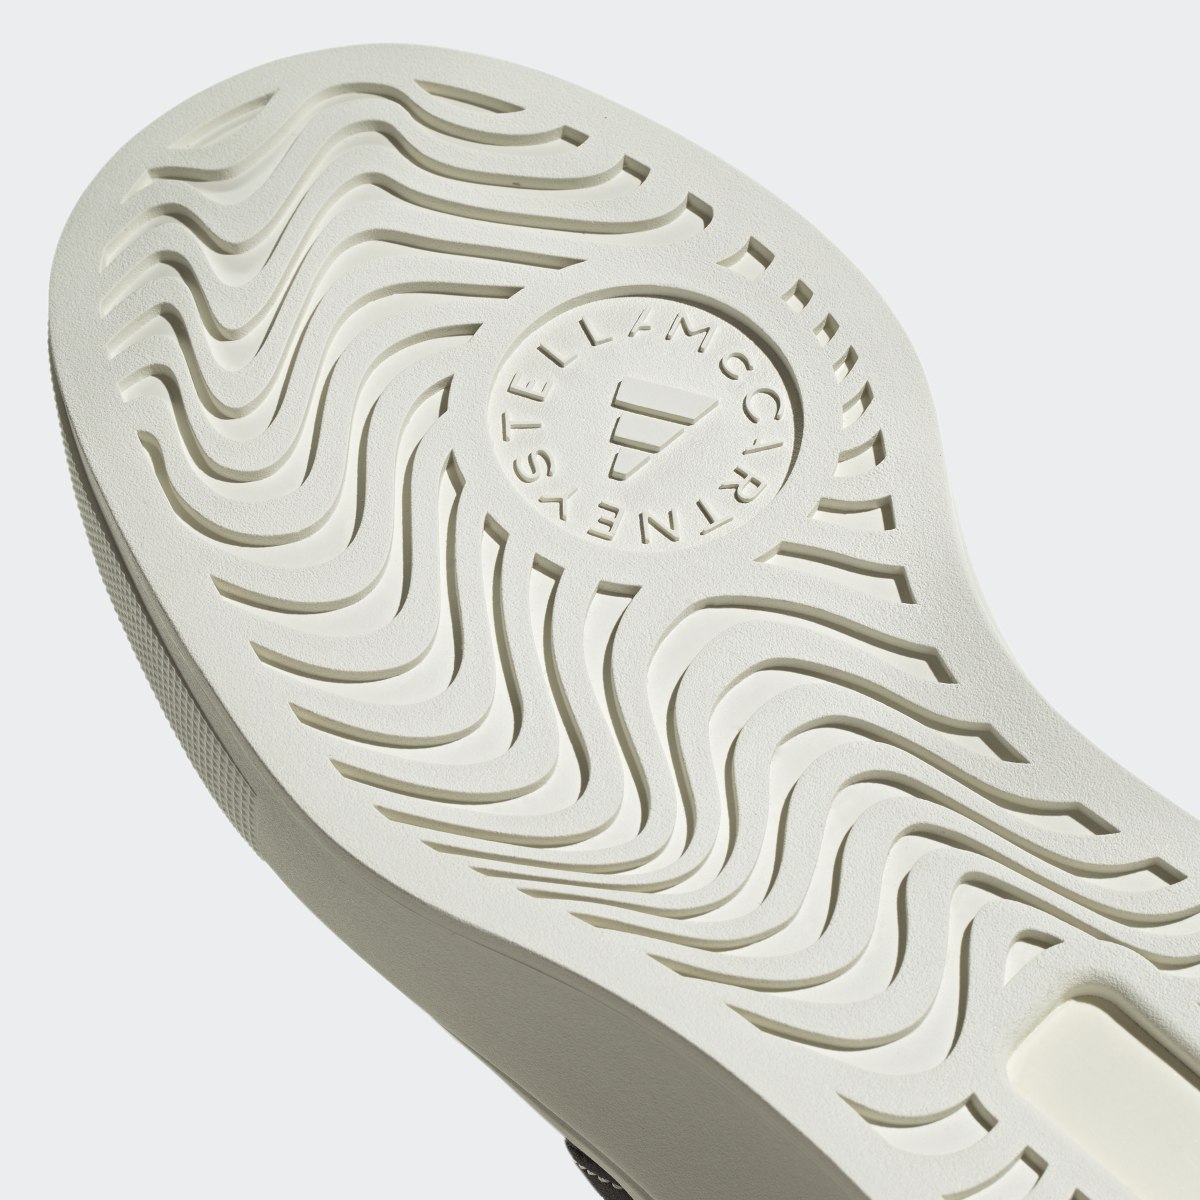 Adidas Zapatilla adidas by Stella McCartney Court Slip-On. 10